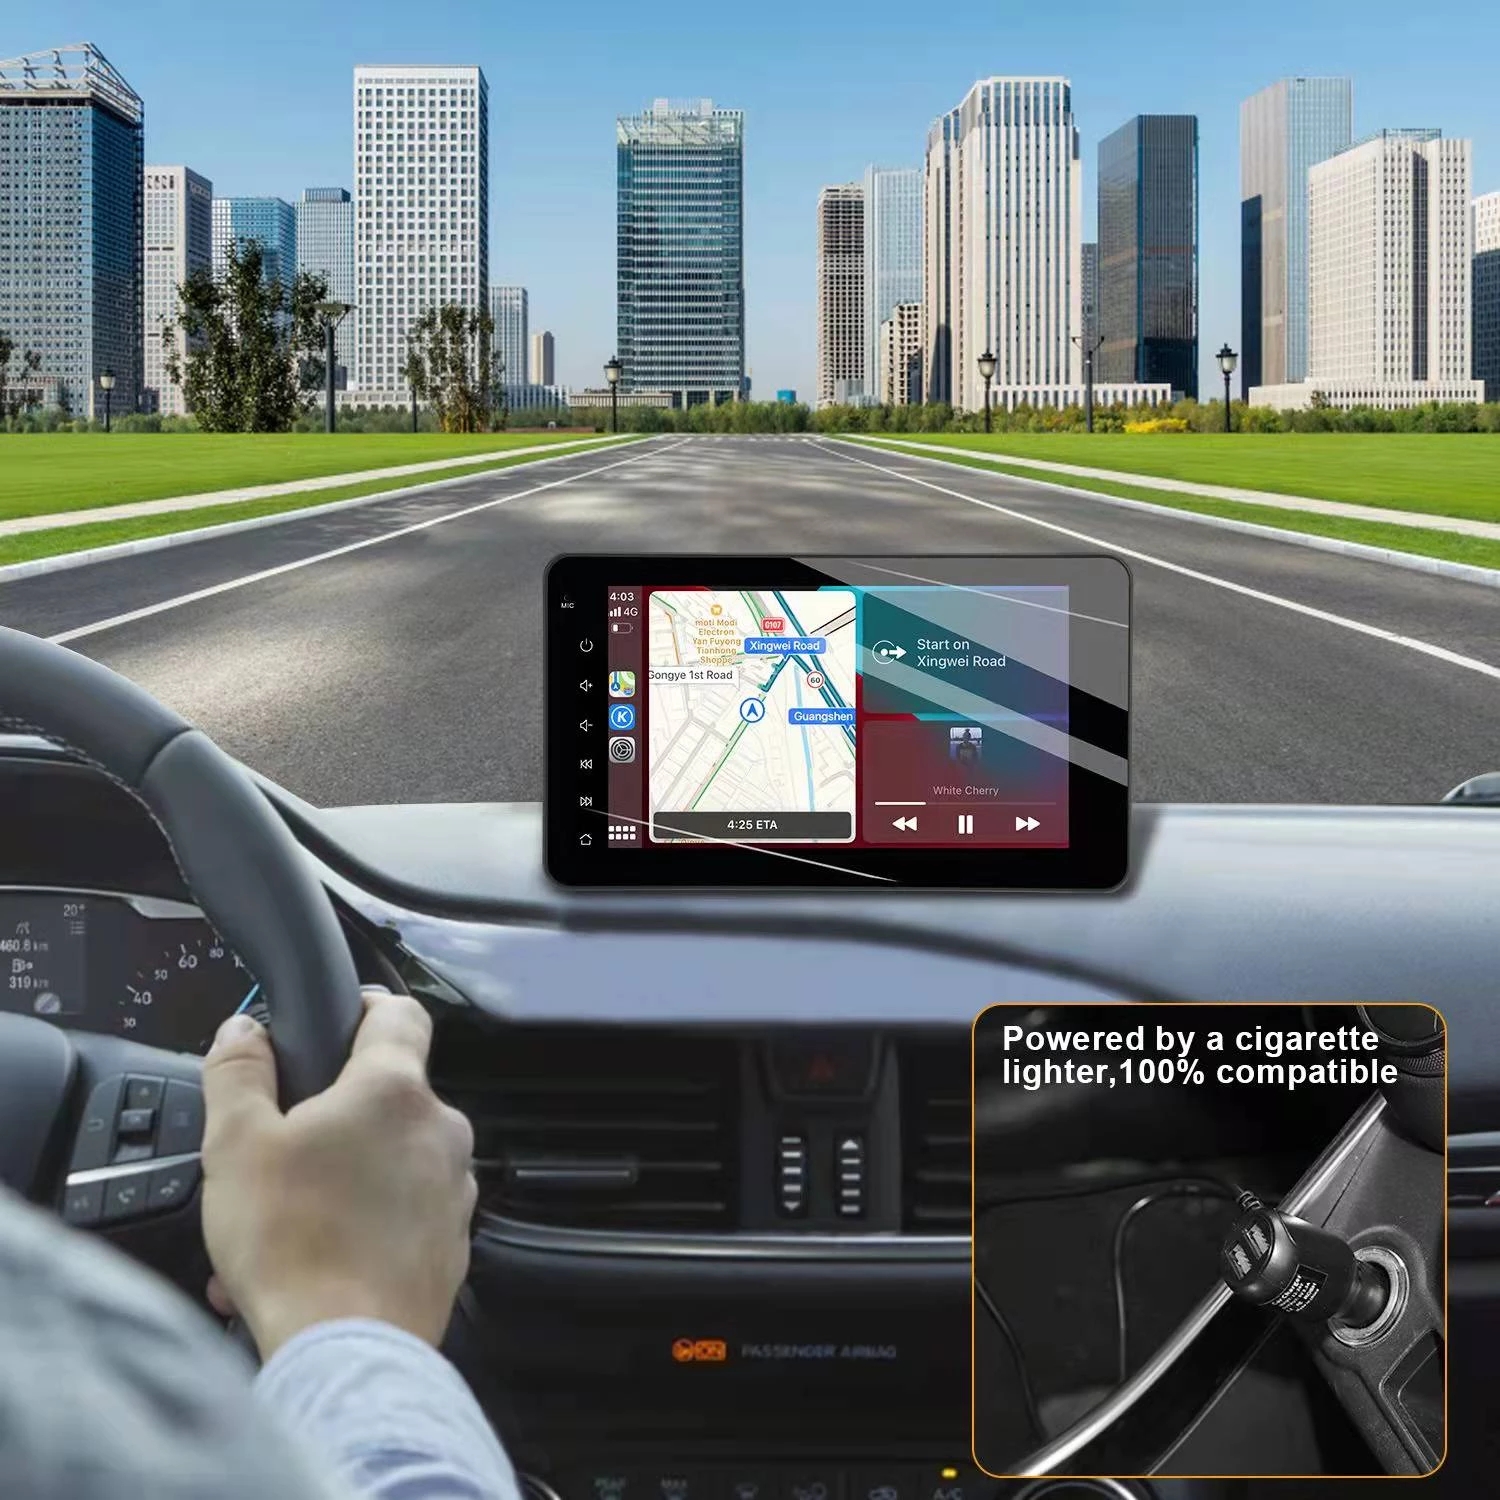 Portable-Apple-Carplay-Wireless-7-Inch-Car-Monitor-LCD-Screen-Mirror-Link-Multimedia-Video-Players.jpg_Q90.jpg_.webp